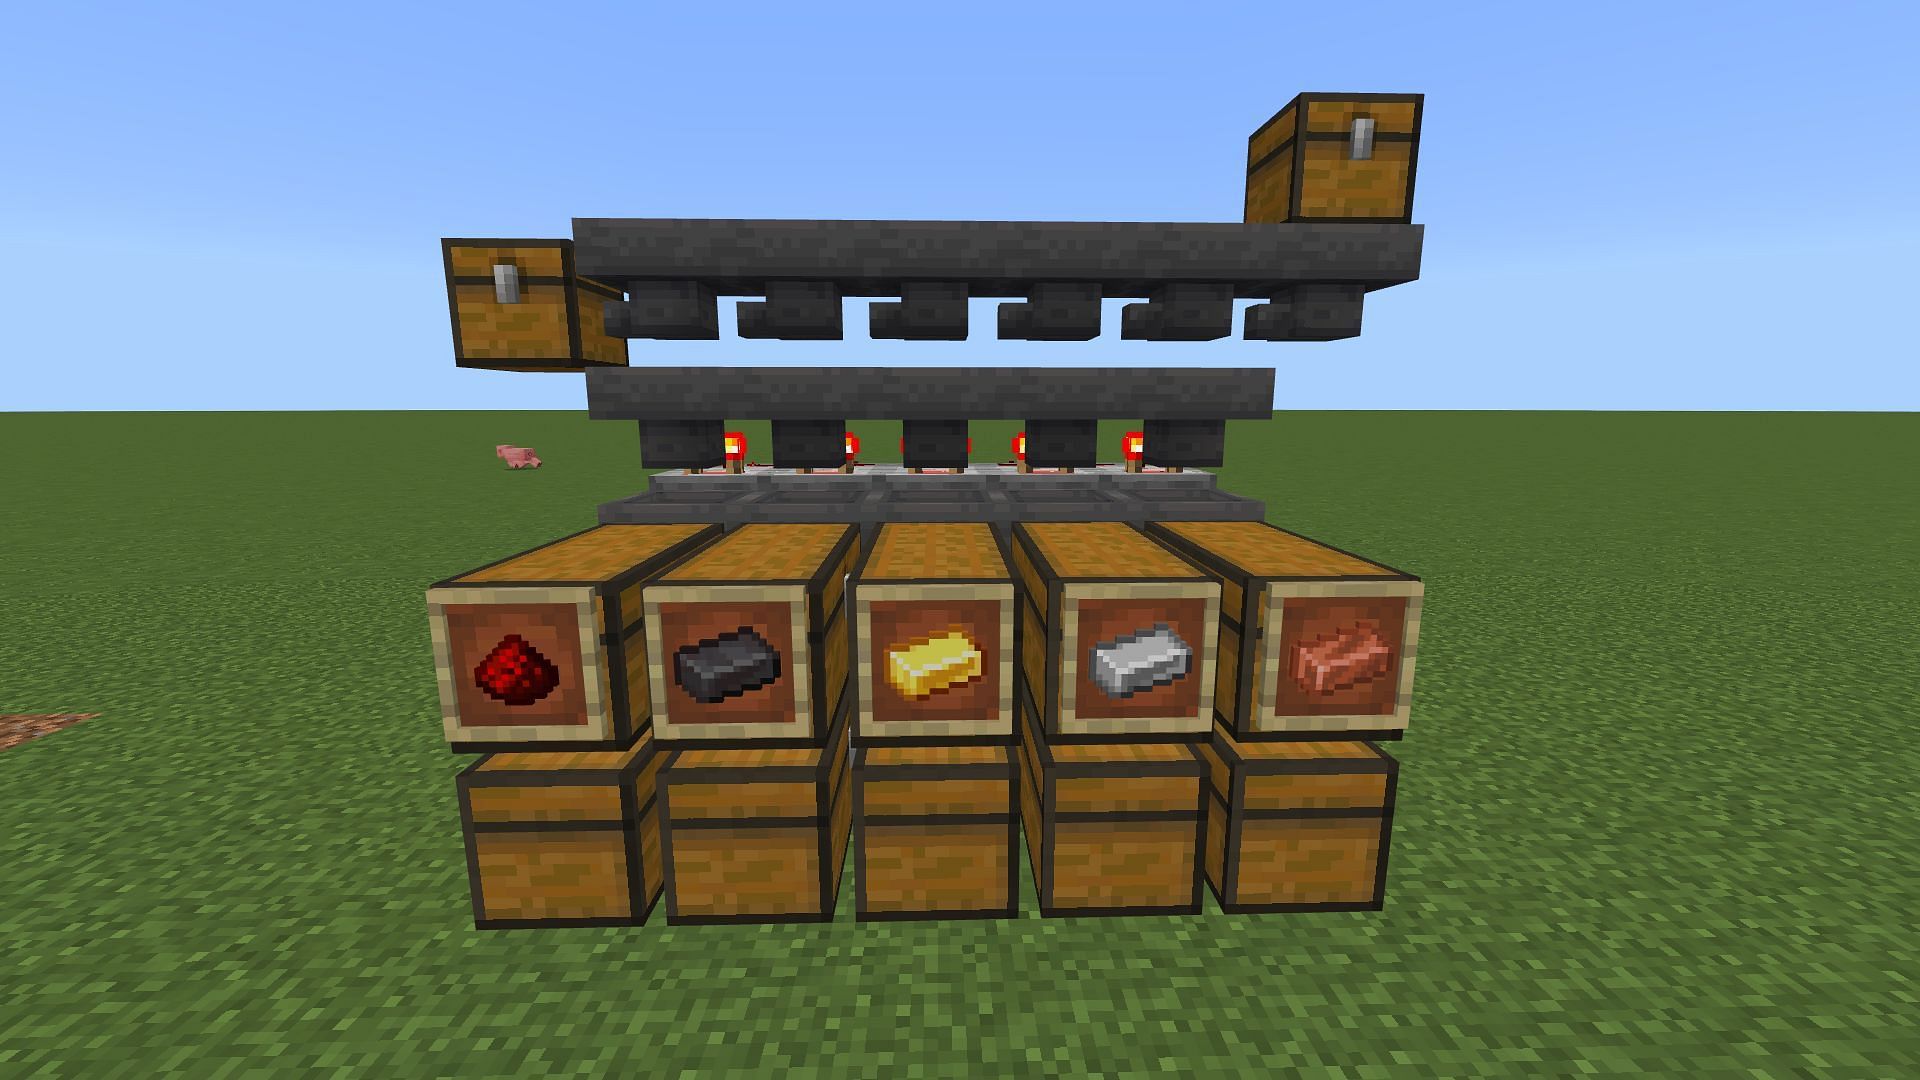 How to make an item sorter in Minecraft Bedrock